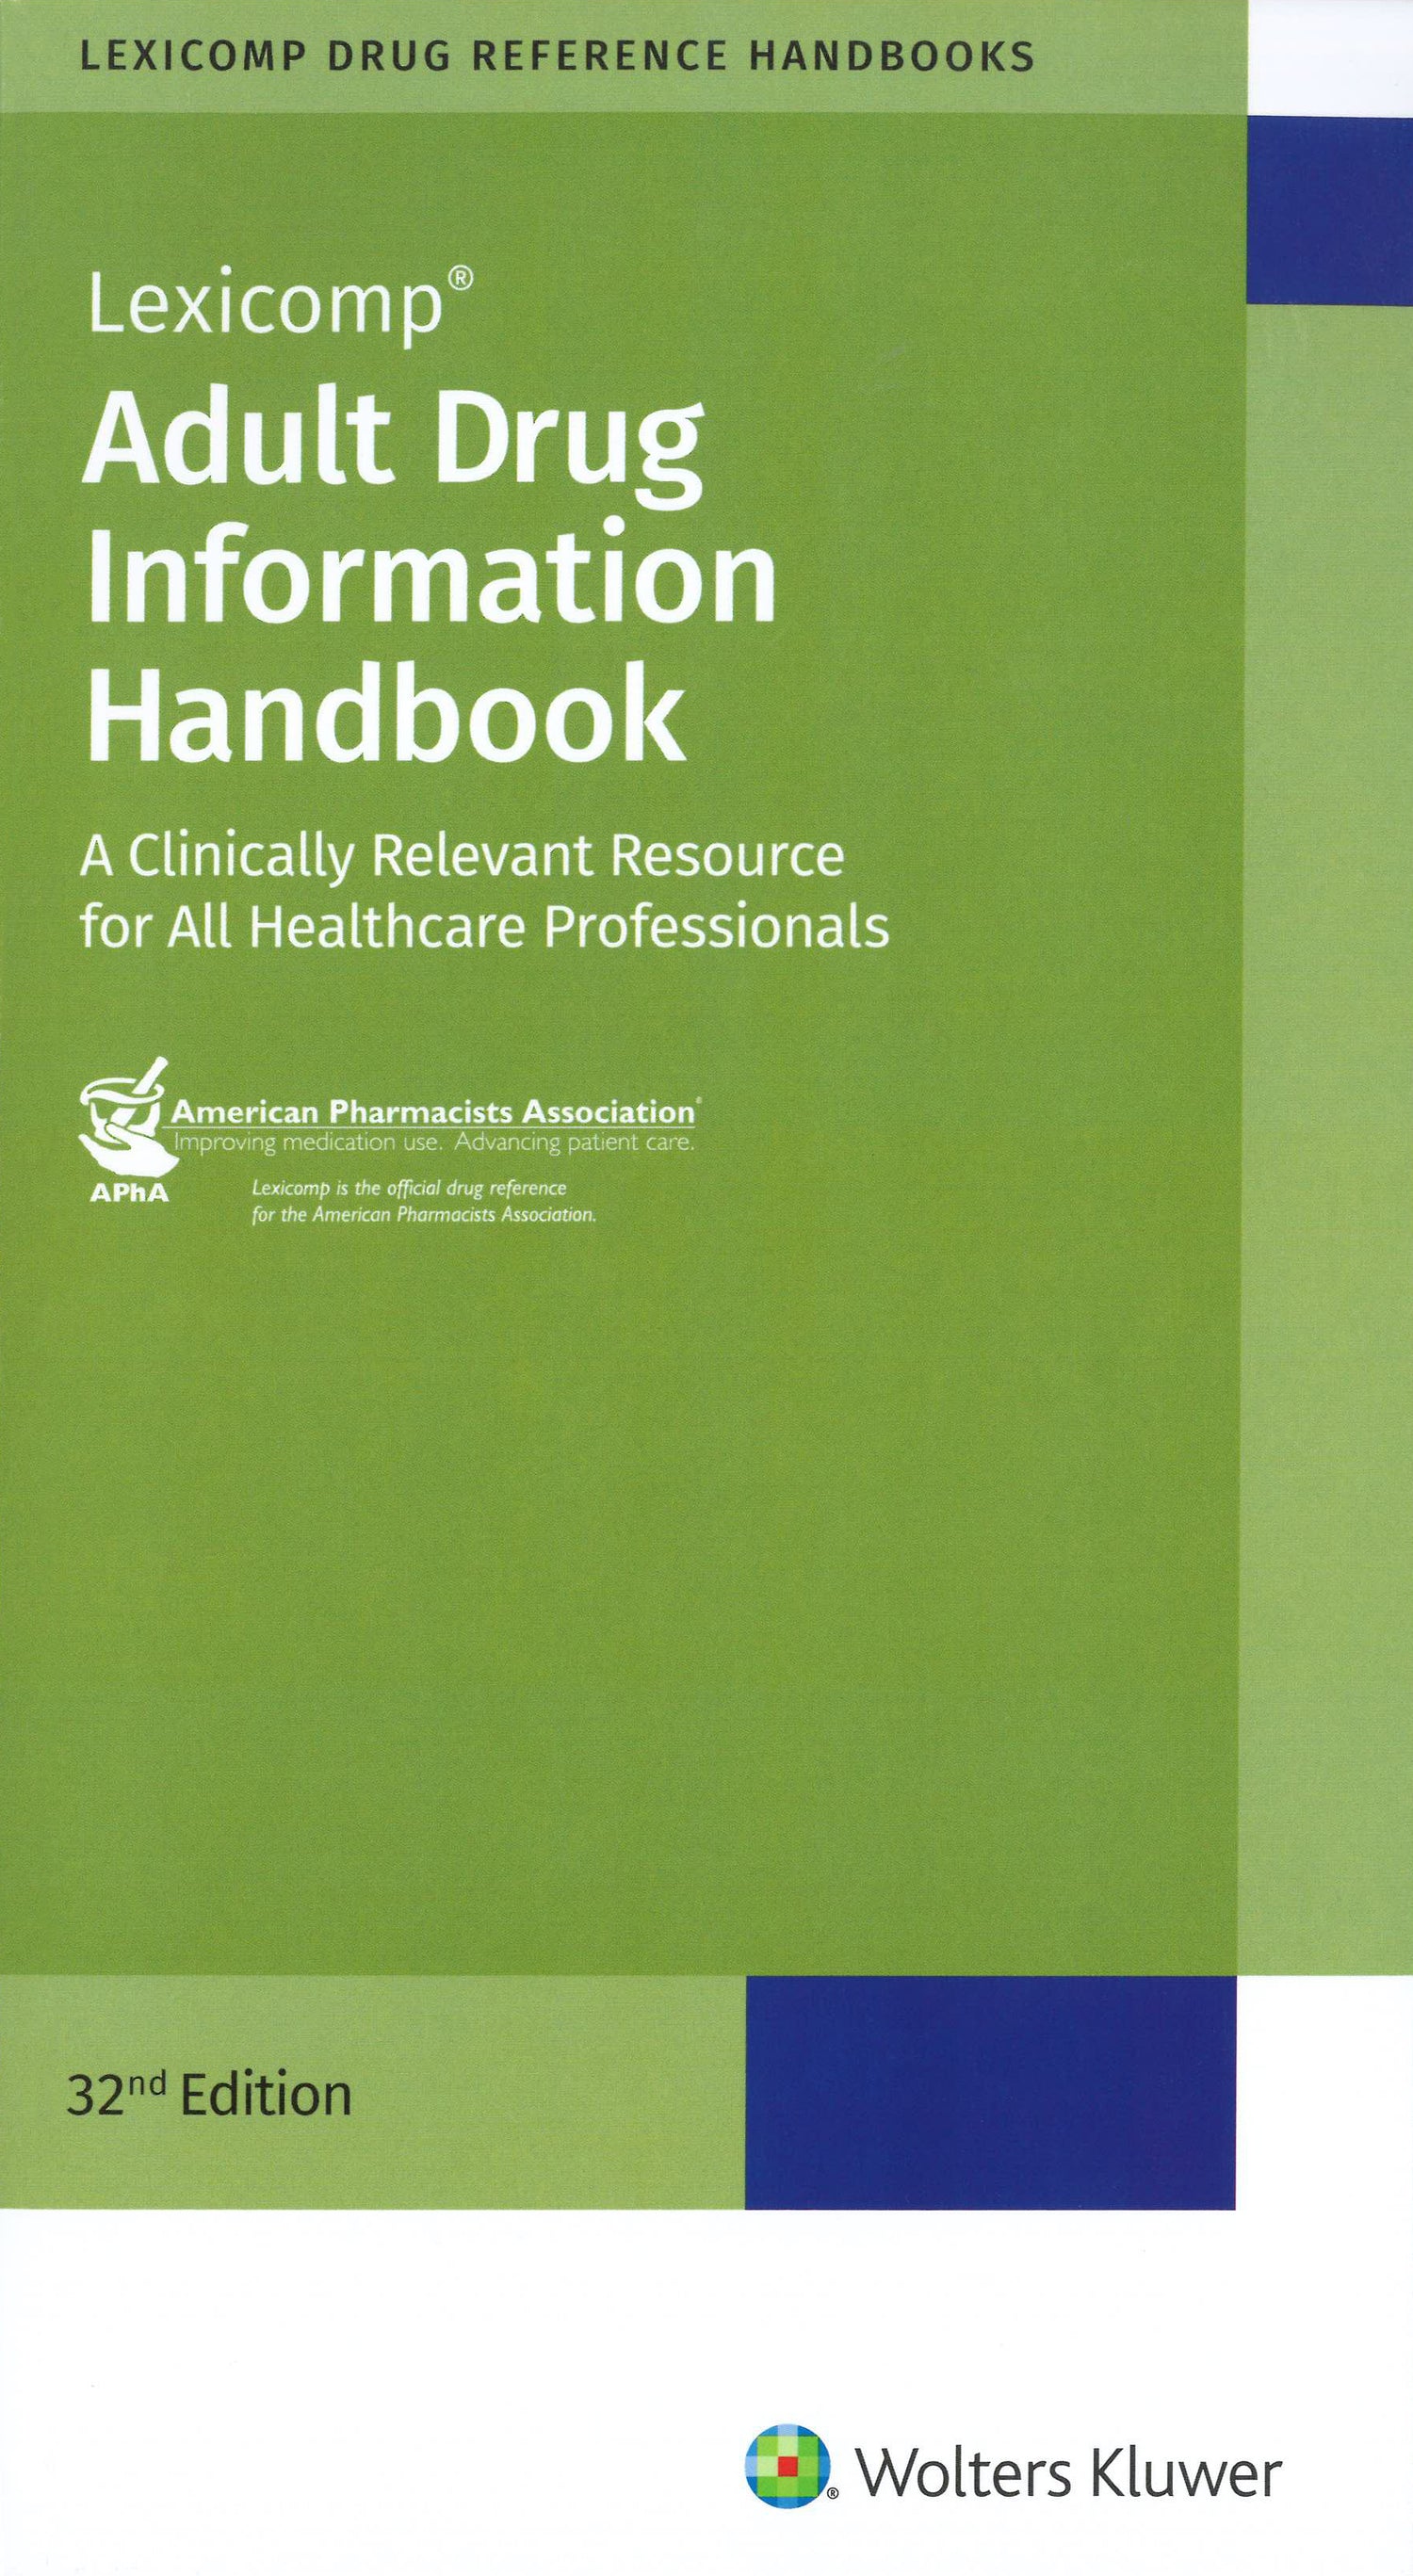 The Drug Information Handbook - 32nd Edition